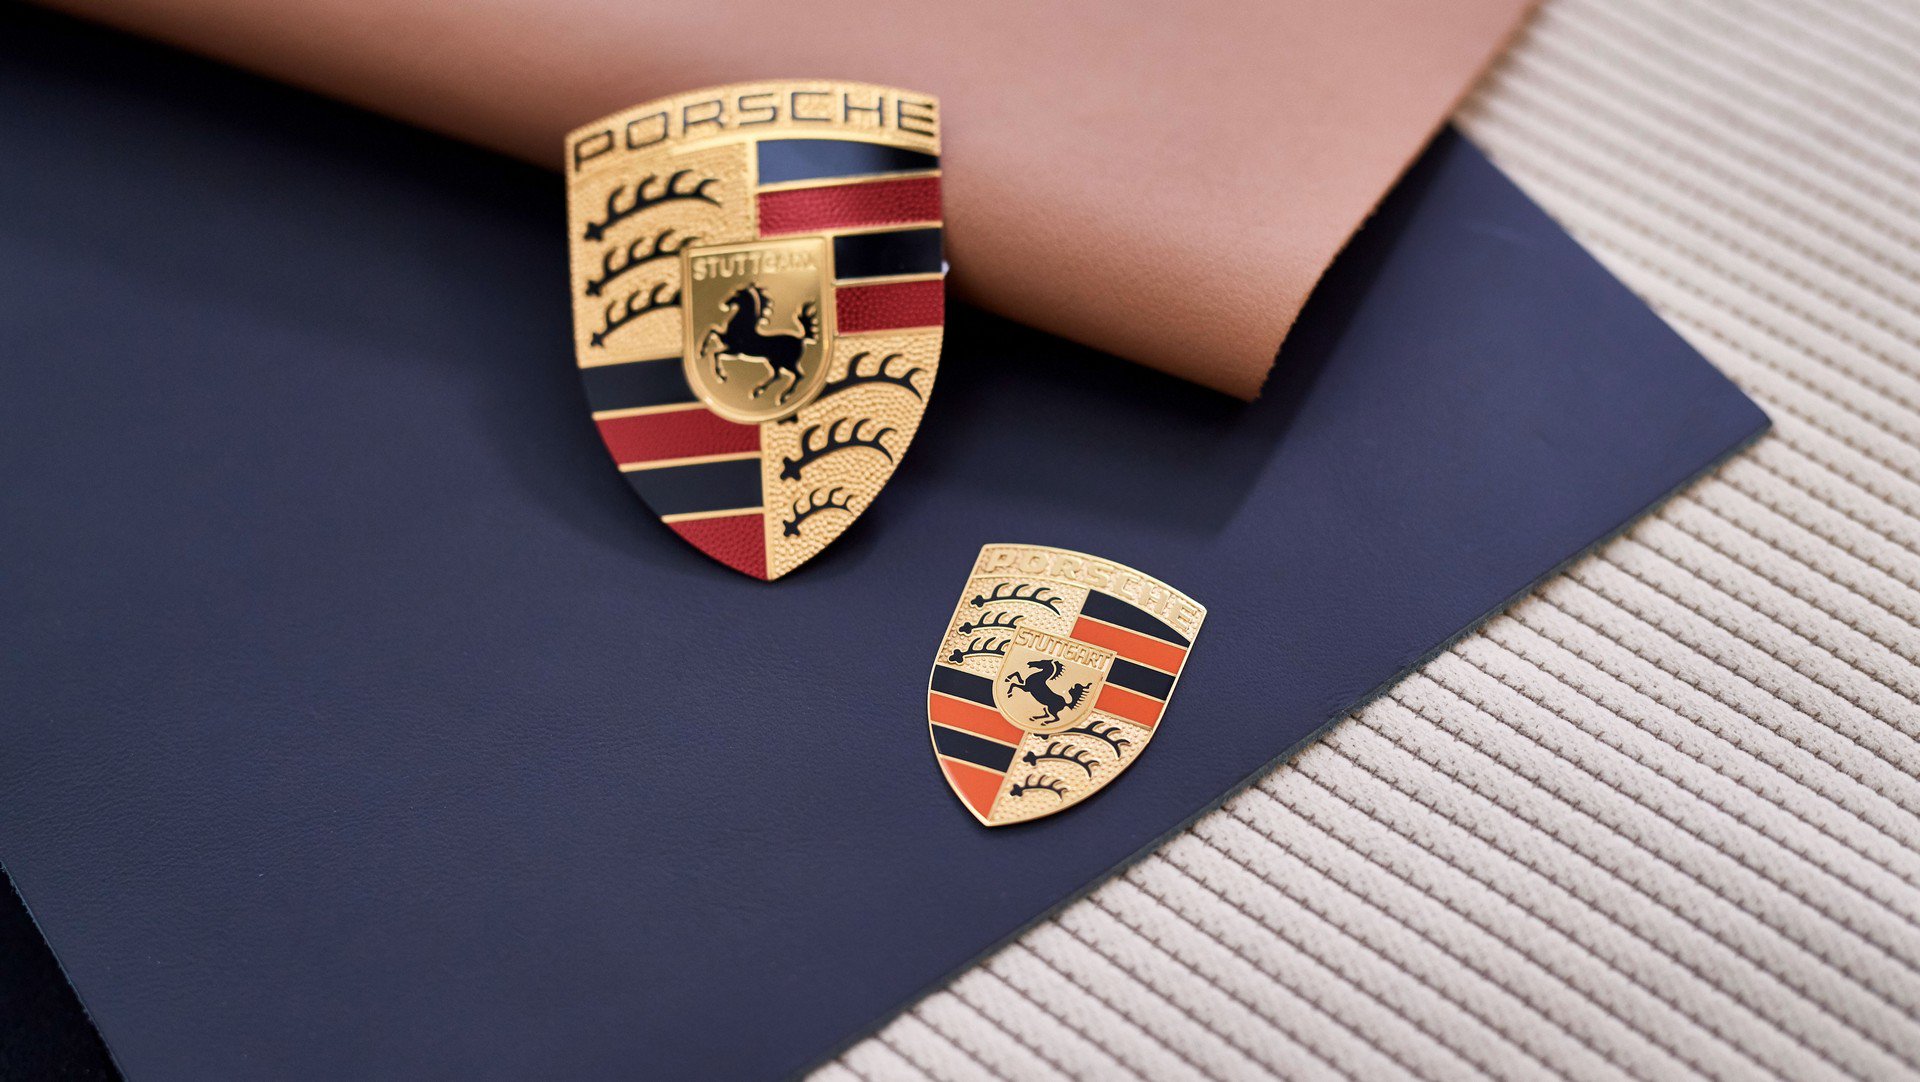 Porsche 911 Heritage retro-inspired cars